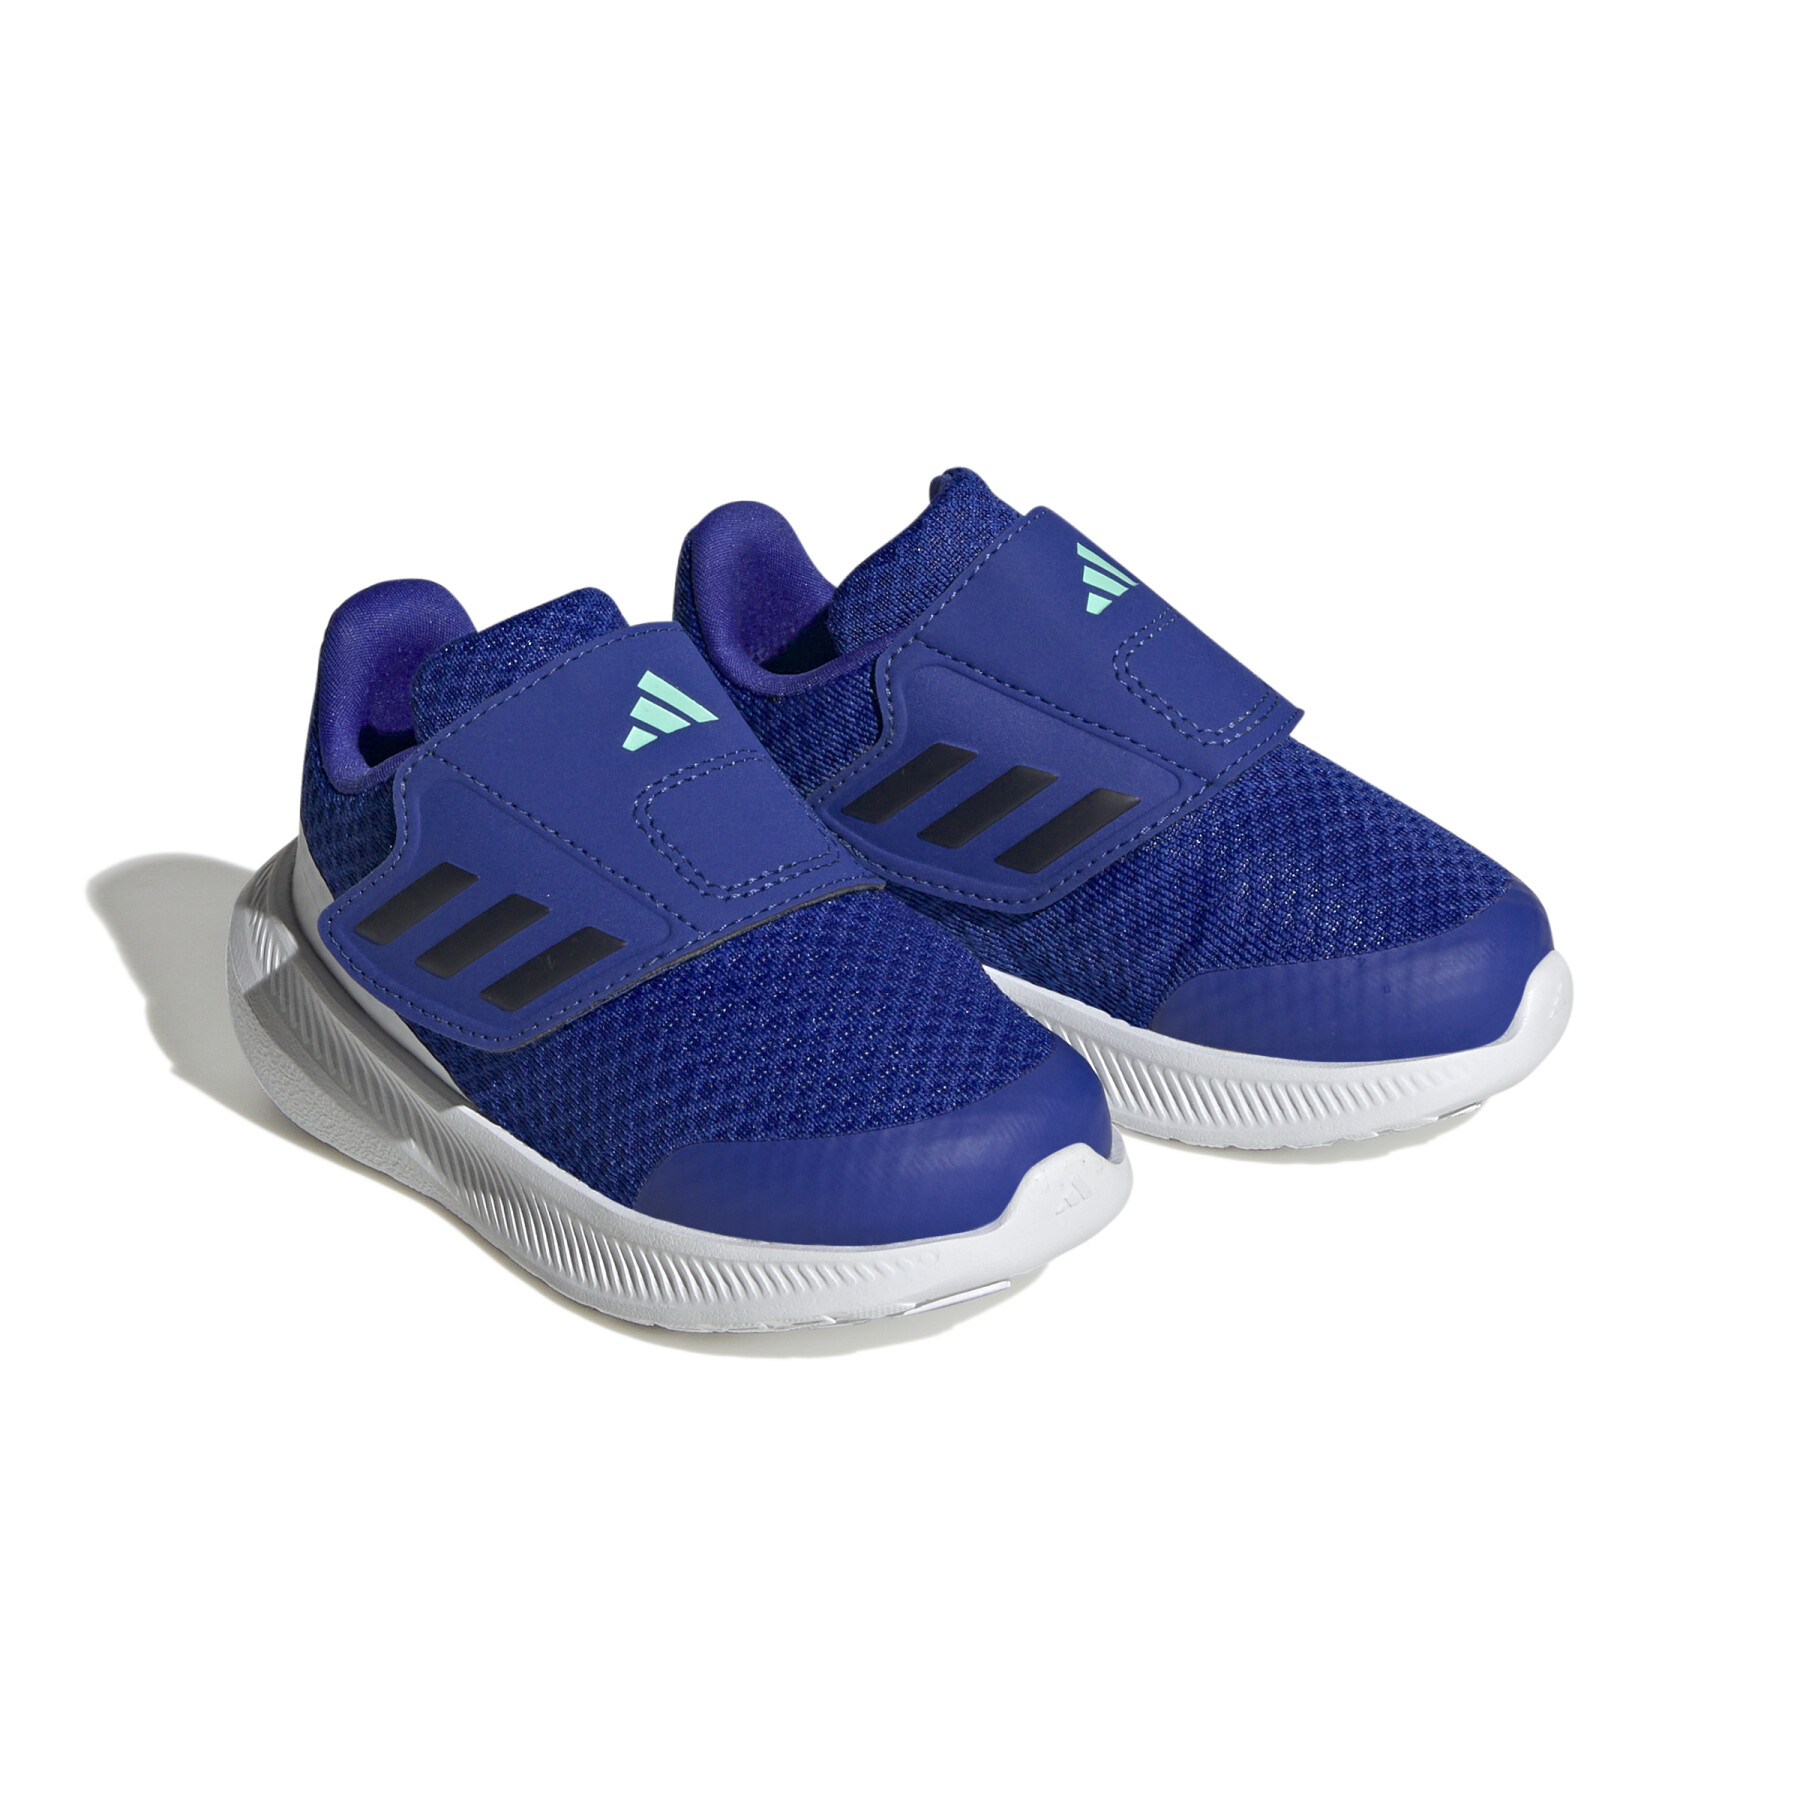  running buty dla dziewczynki adidas Runfalcon 3.0